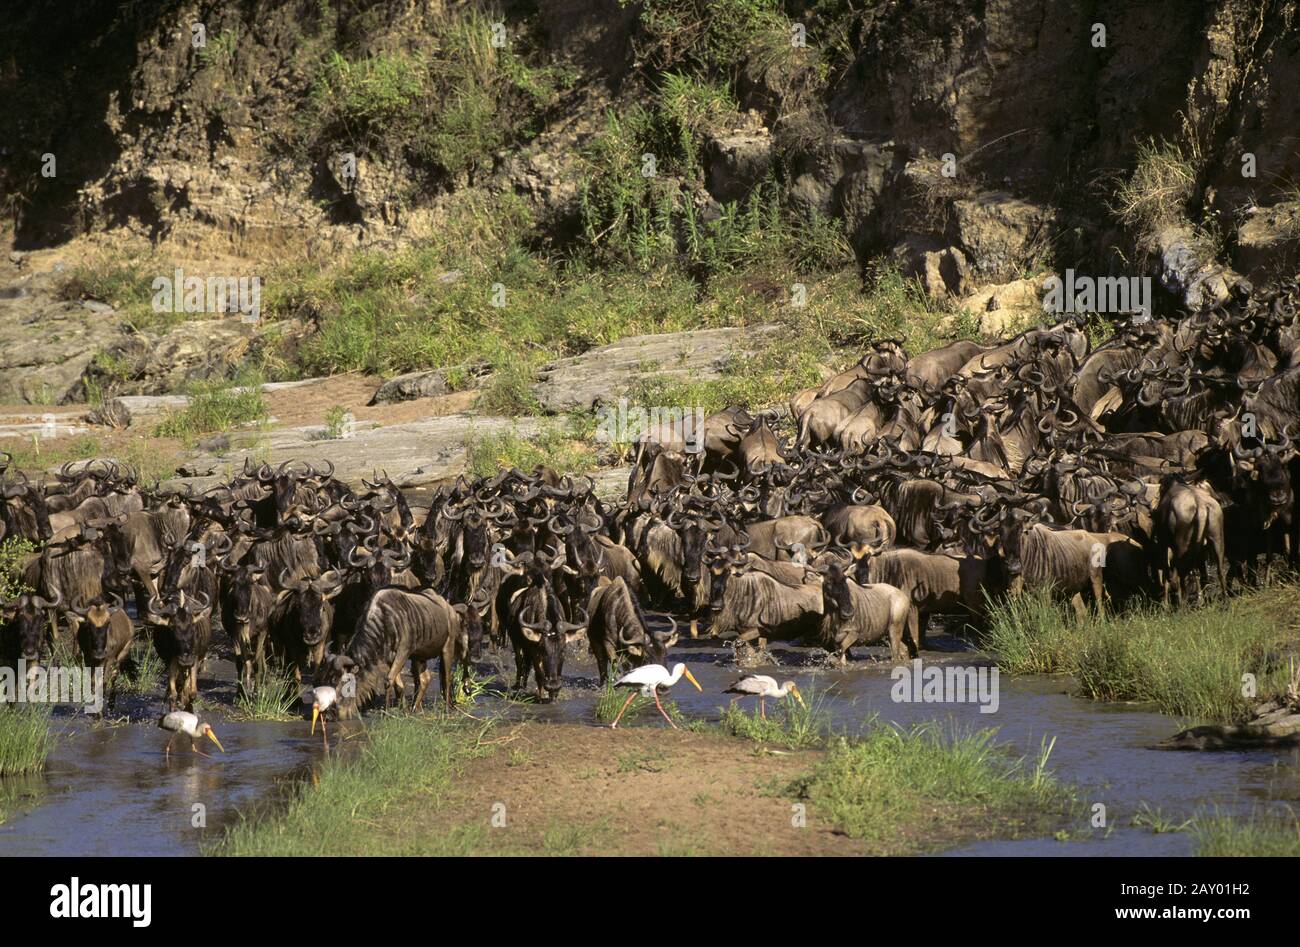 Gnuwanderung, Masai Mara, Kenia, Afrika, Connochoates taurinus, africa, kenya, animal migration, gnus, wildebeests Stock Photo